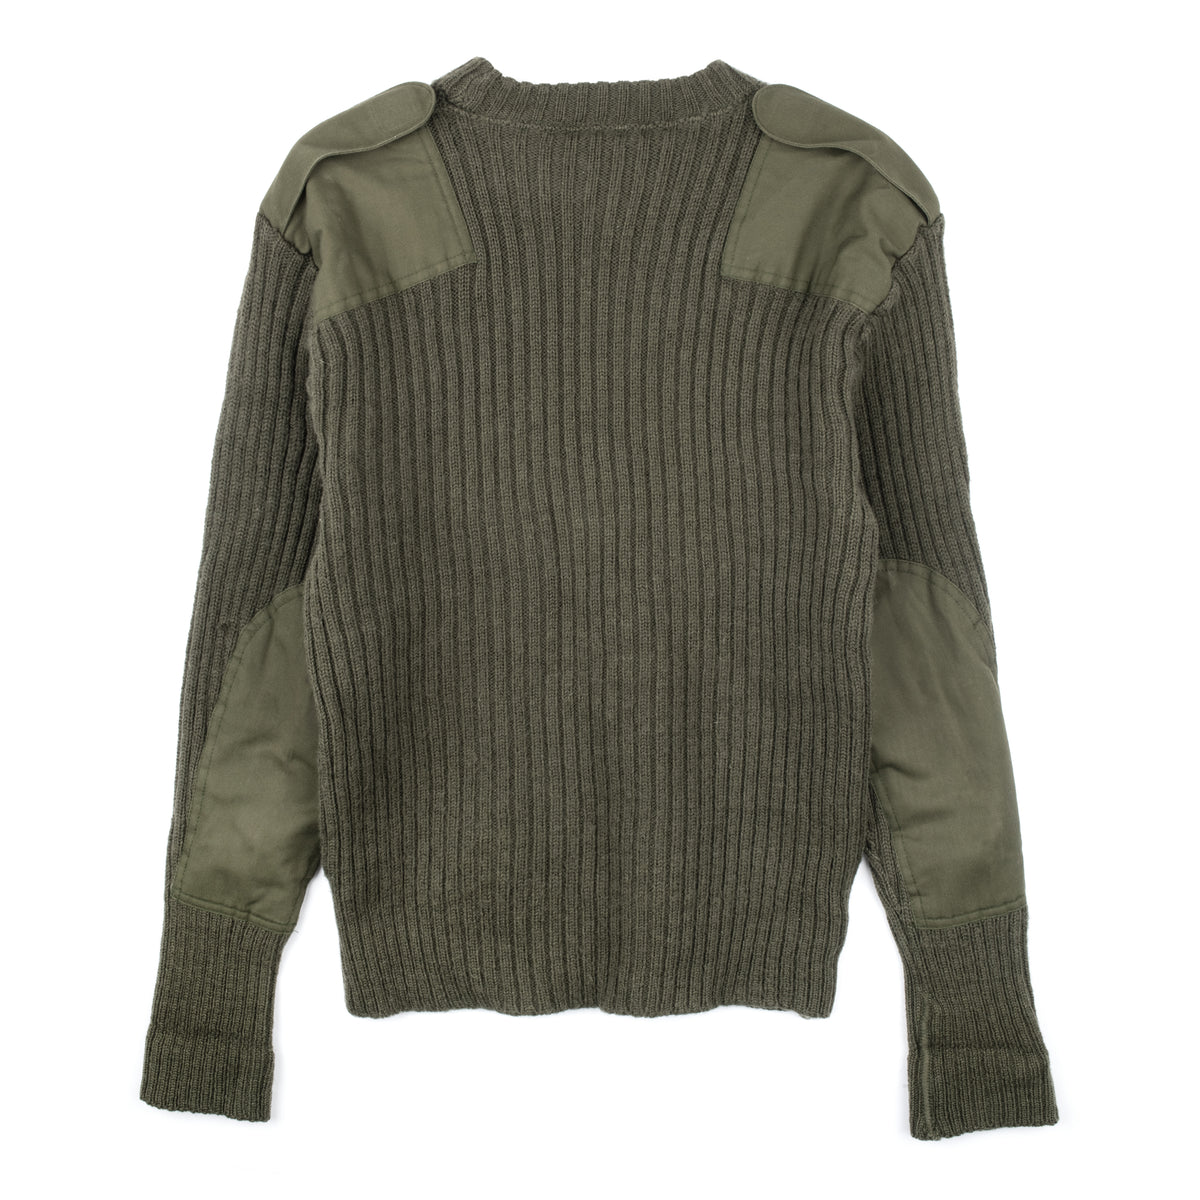 British Army Commando Sweater